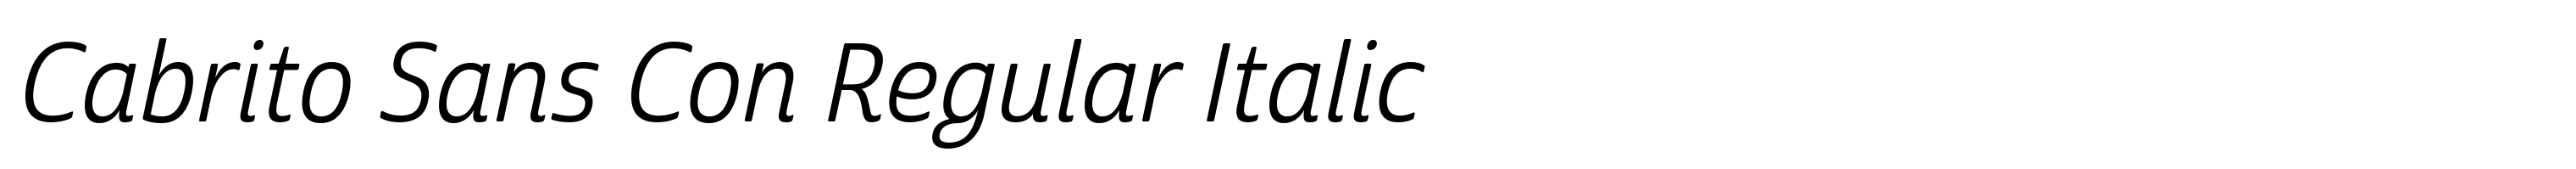 Cabrito Sans Con Regular Italic